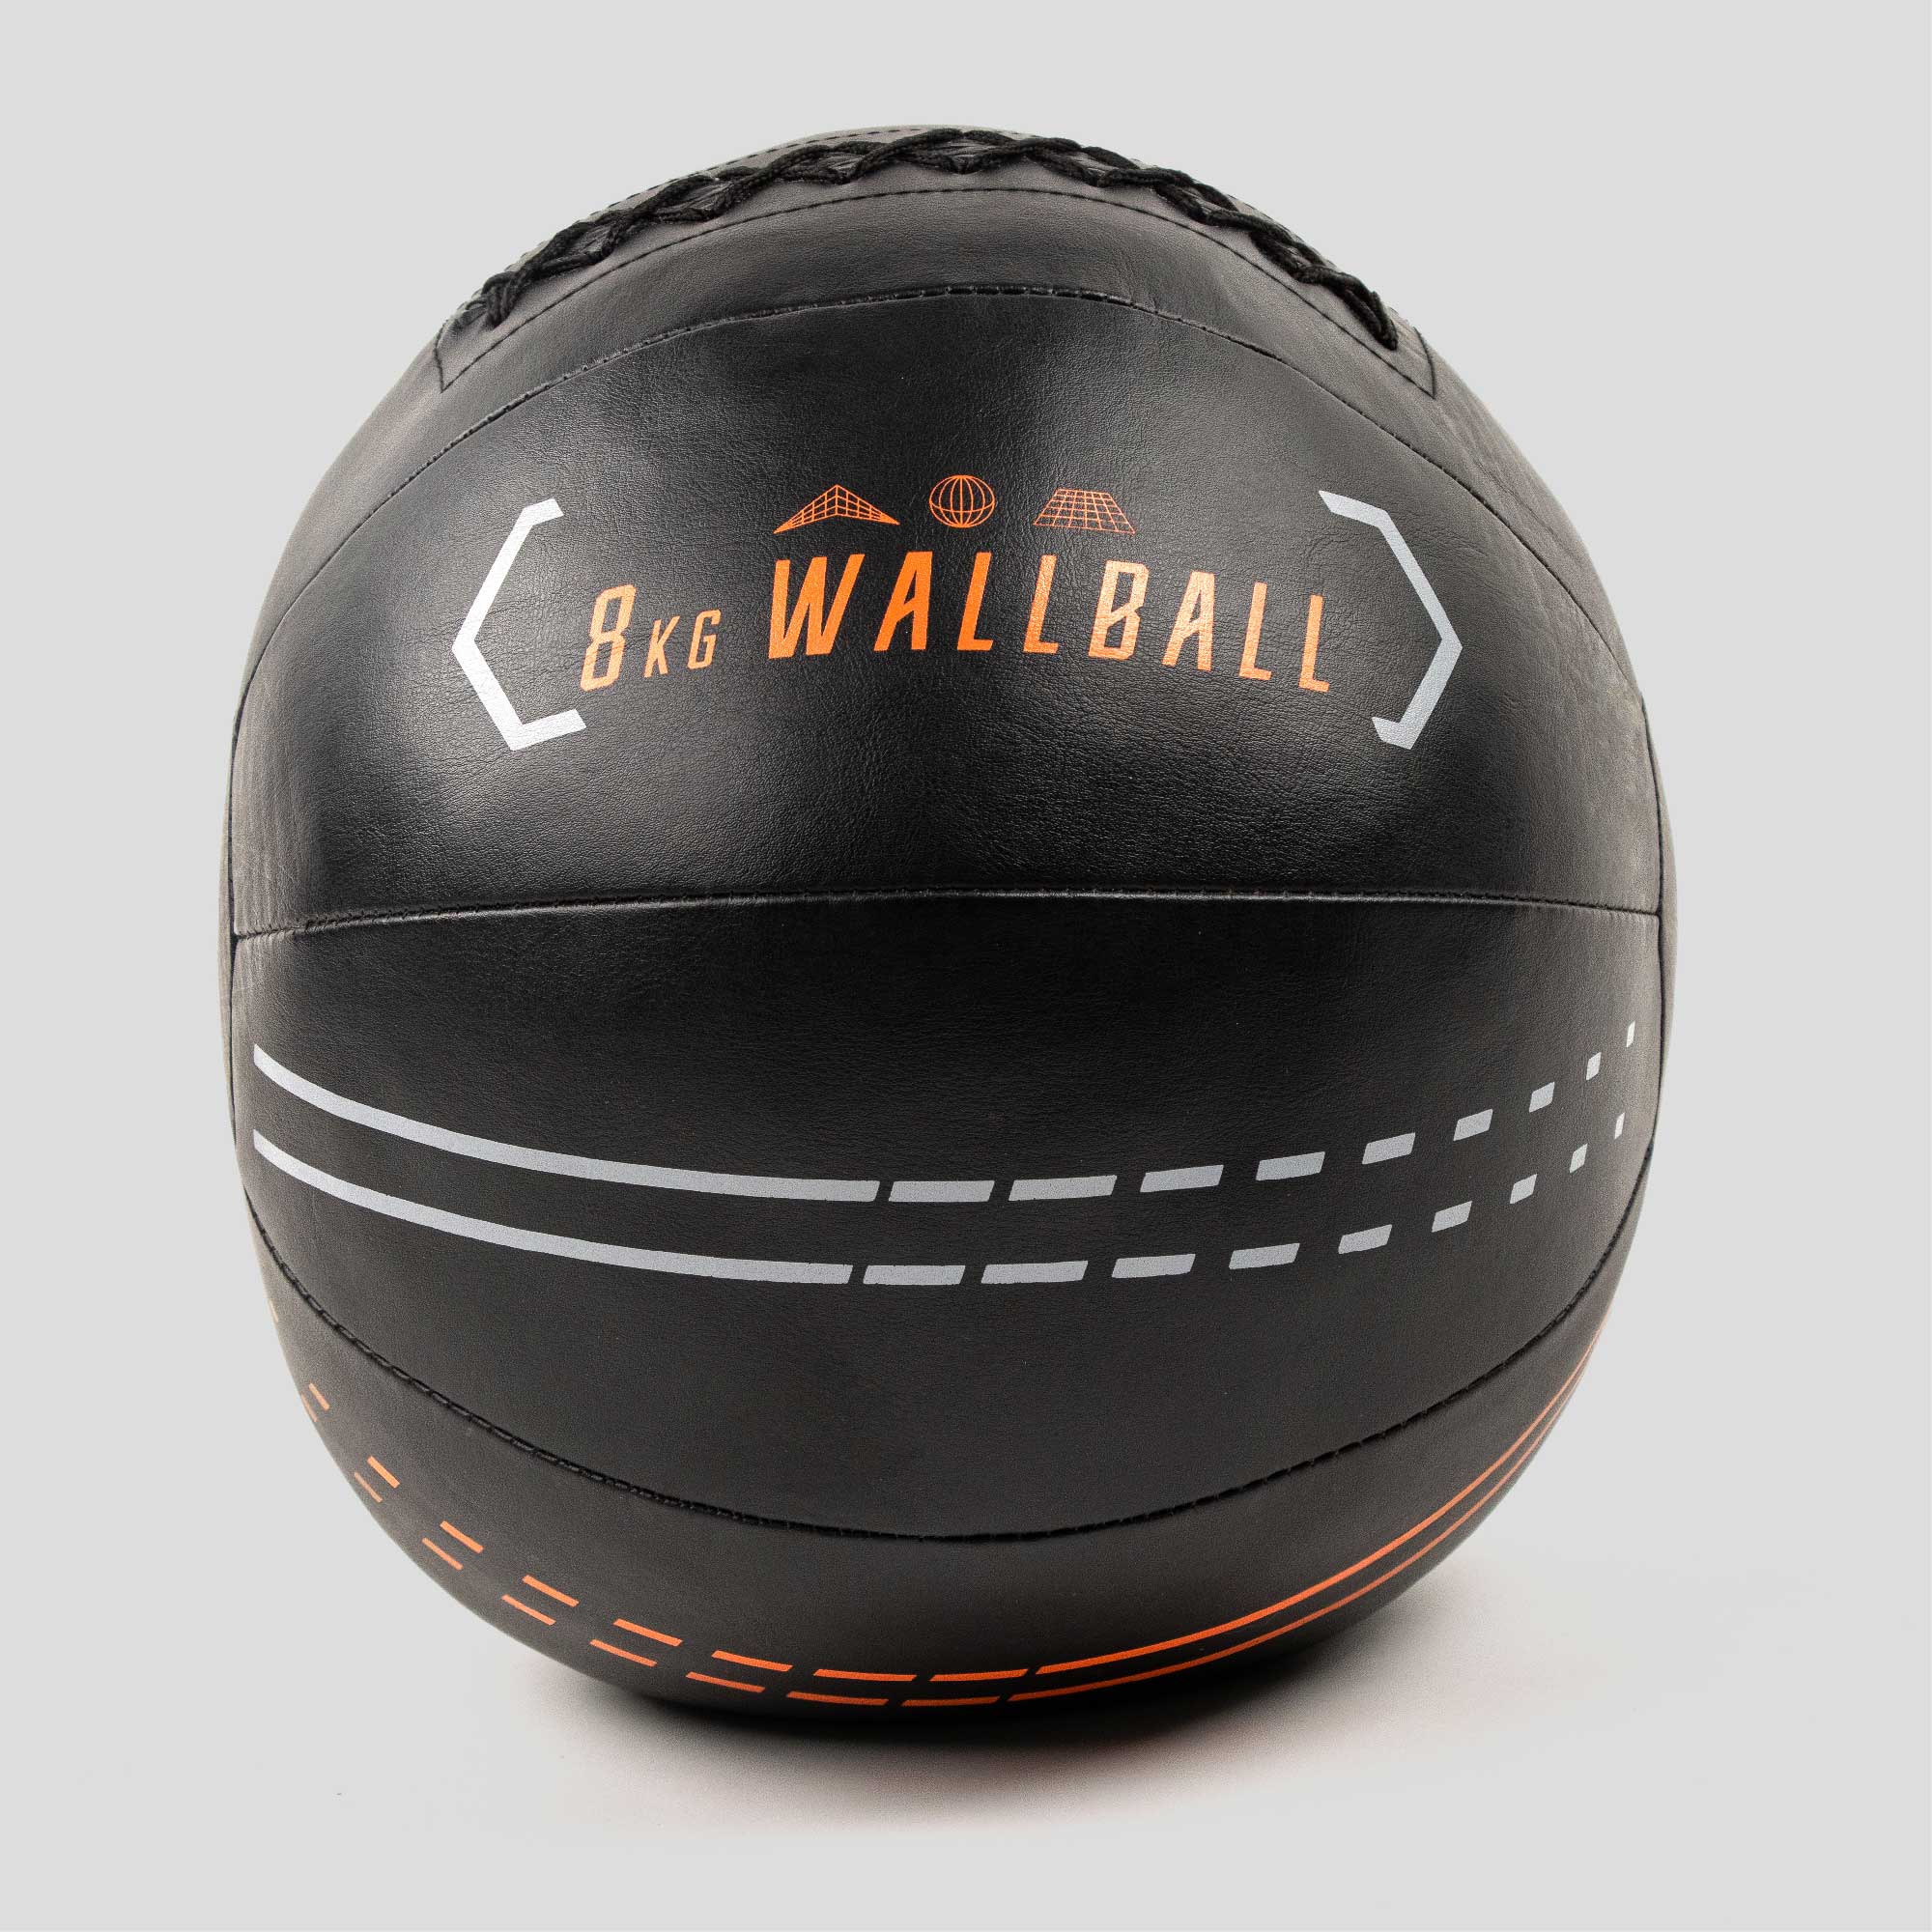 Wall Ball - 8kg